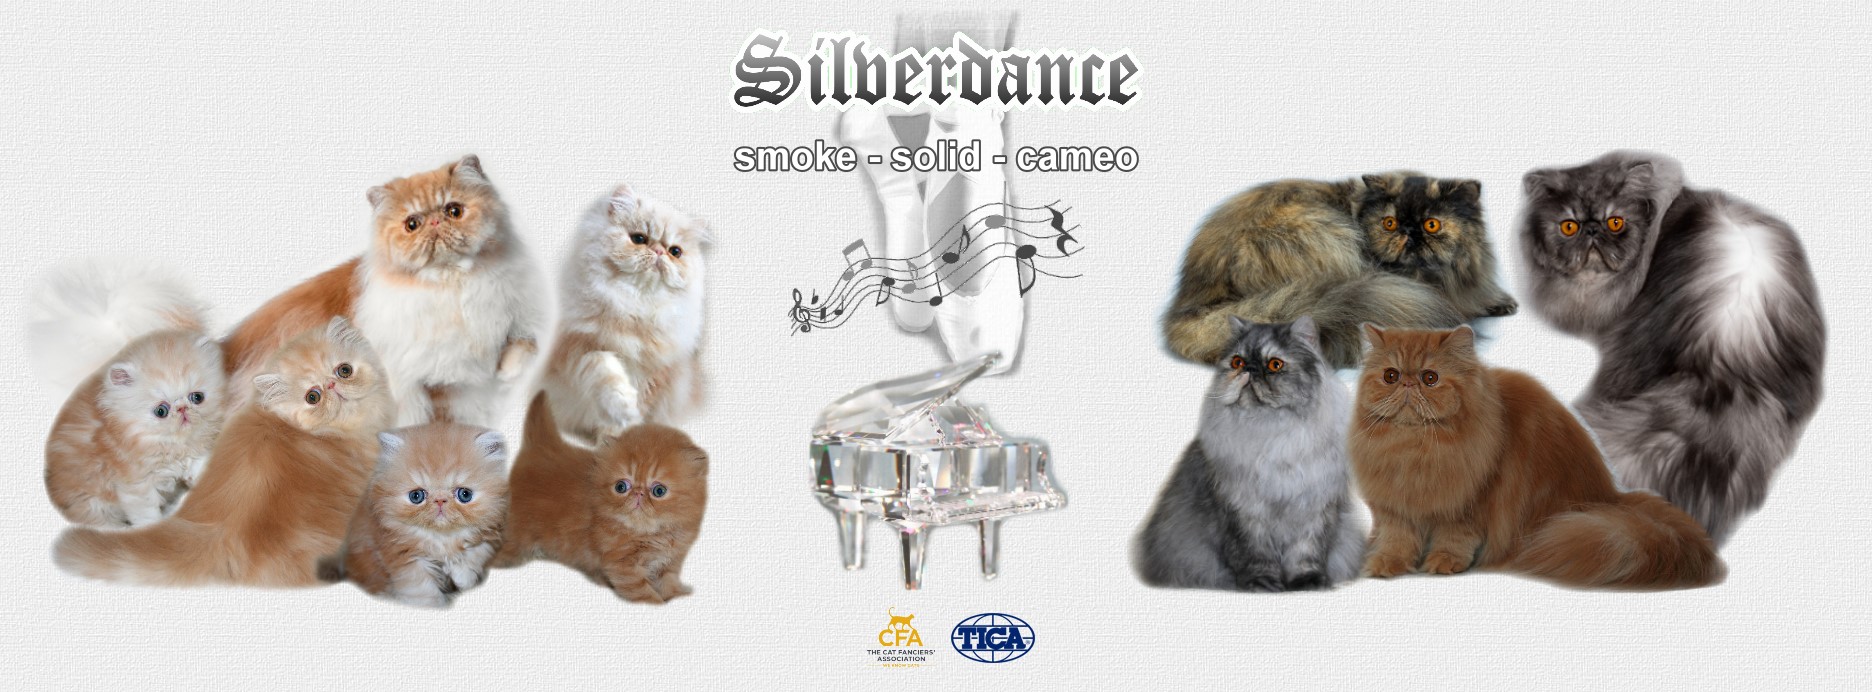 Silverdance Persians - CFA & TICA cattery for smoke Persians & solid Persians & cameo Persians 